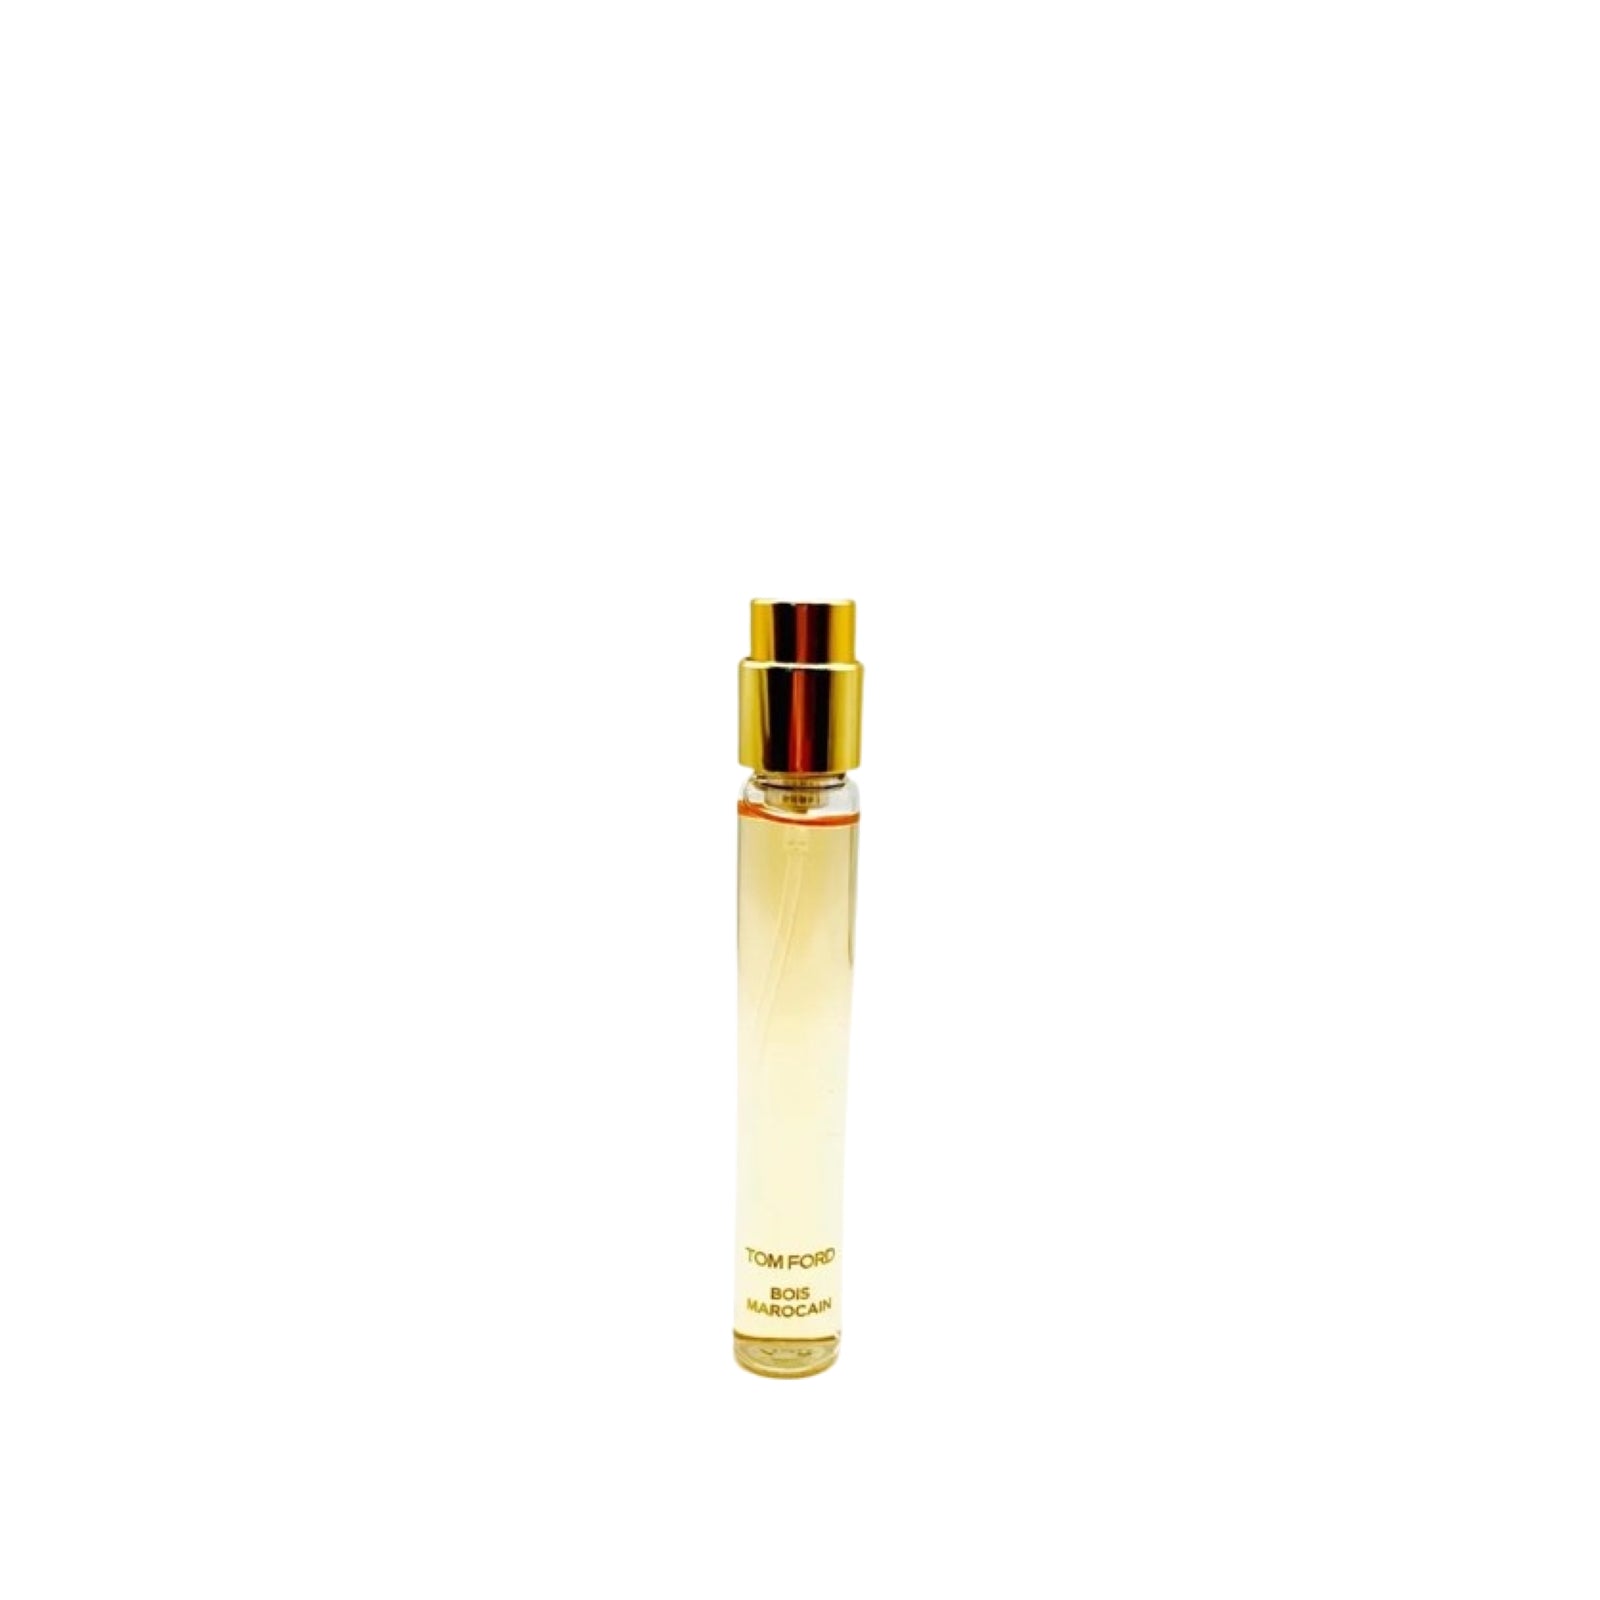 Tom Ford Bois Marocain Eau De Parfum Spray 0.34 FL OZ / 10 ML